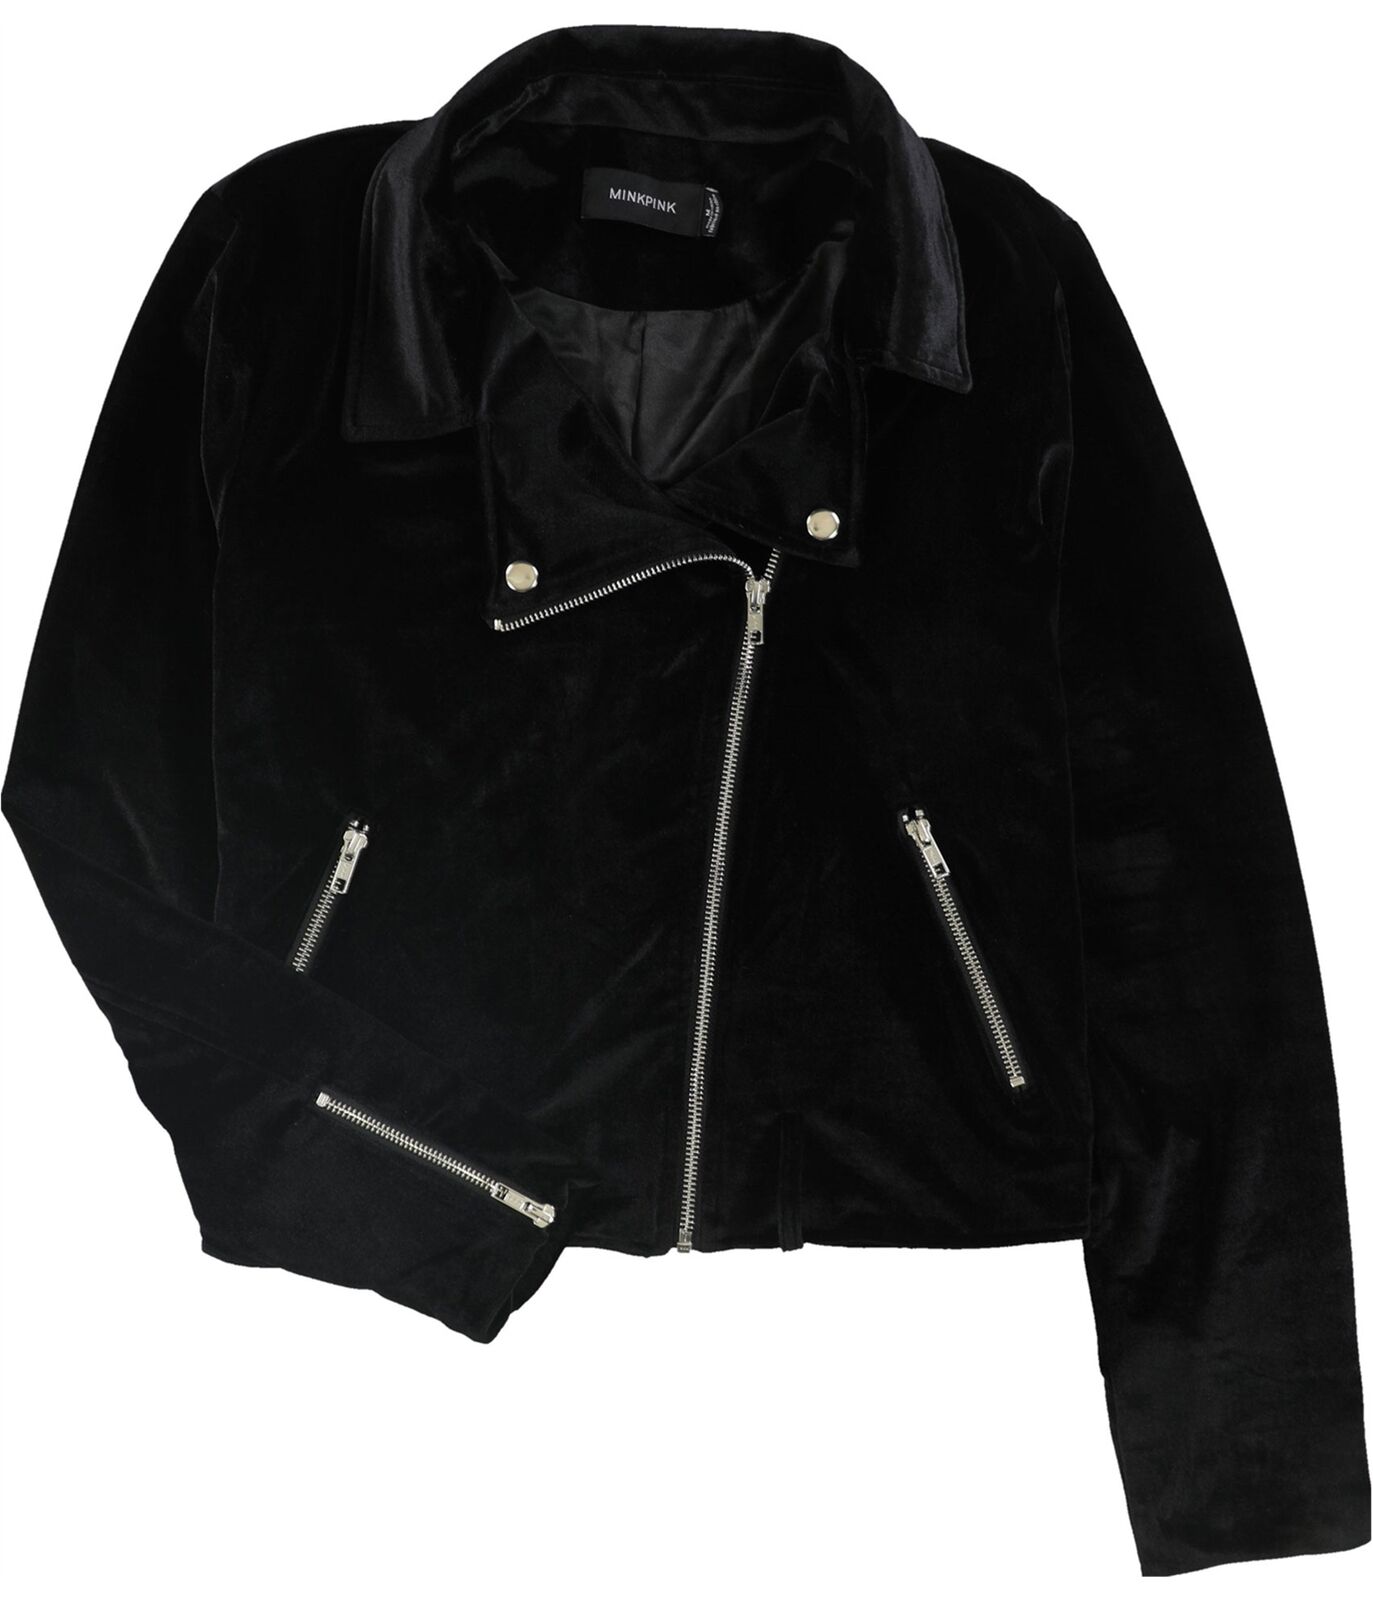 MinkPink Womens Velvet Non Belted Motorcycle Jacket, Black, Medium